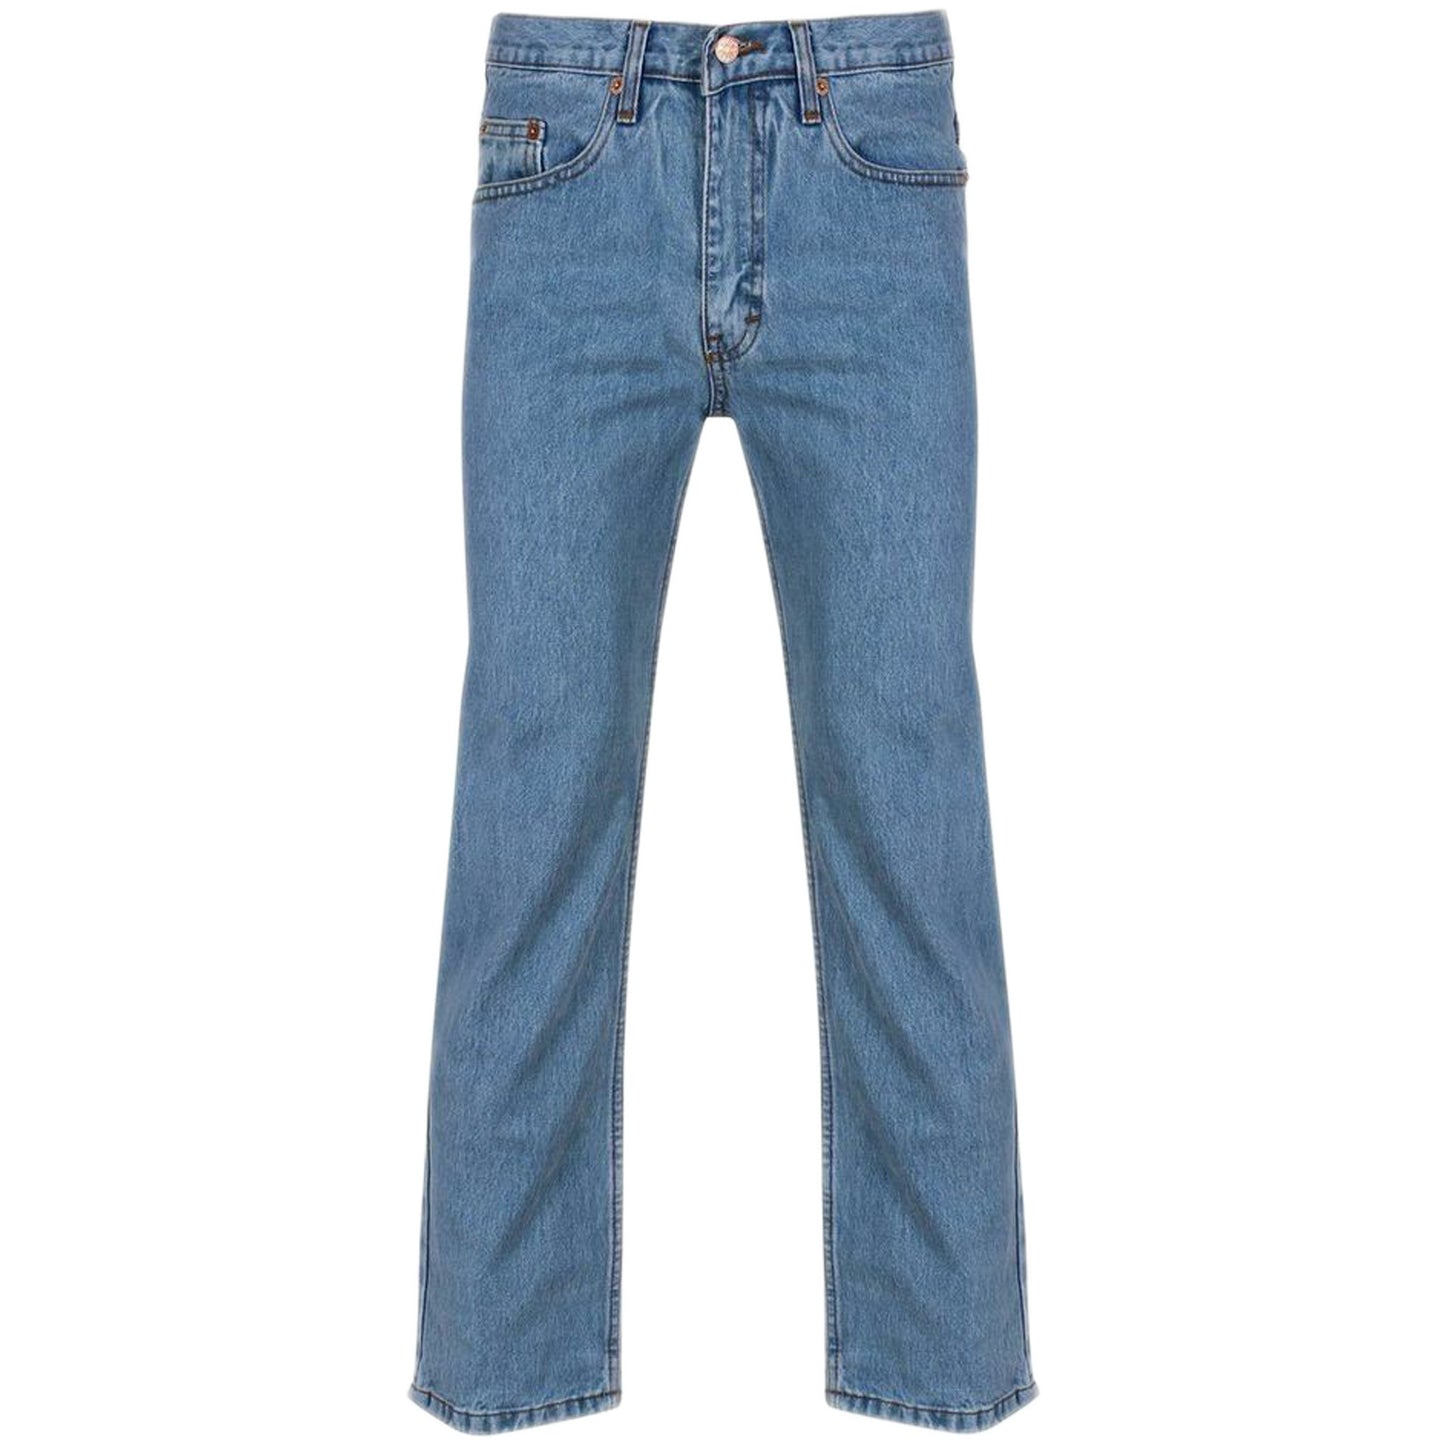 Mens Original Cotton Jeans Basic Plain Straight Leg Heavy Duty Denim Wash Jean Classic Designer Fit Casual Work Wear Zip Fly Belt Loop Pants Pocket Trousers